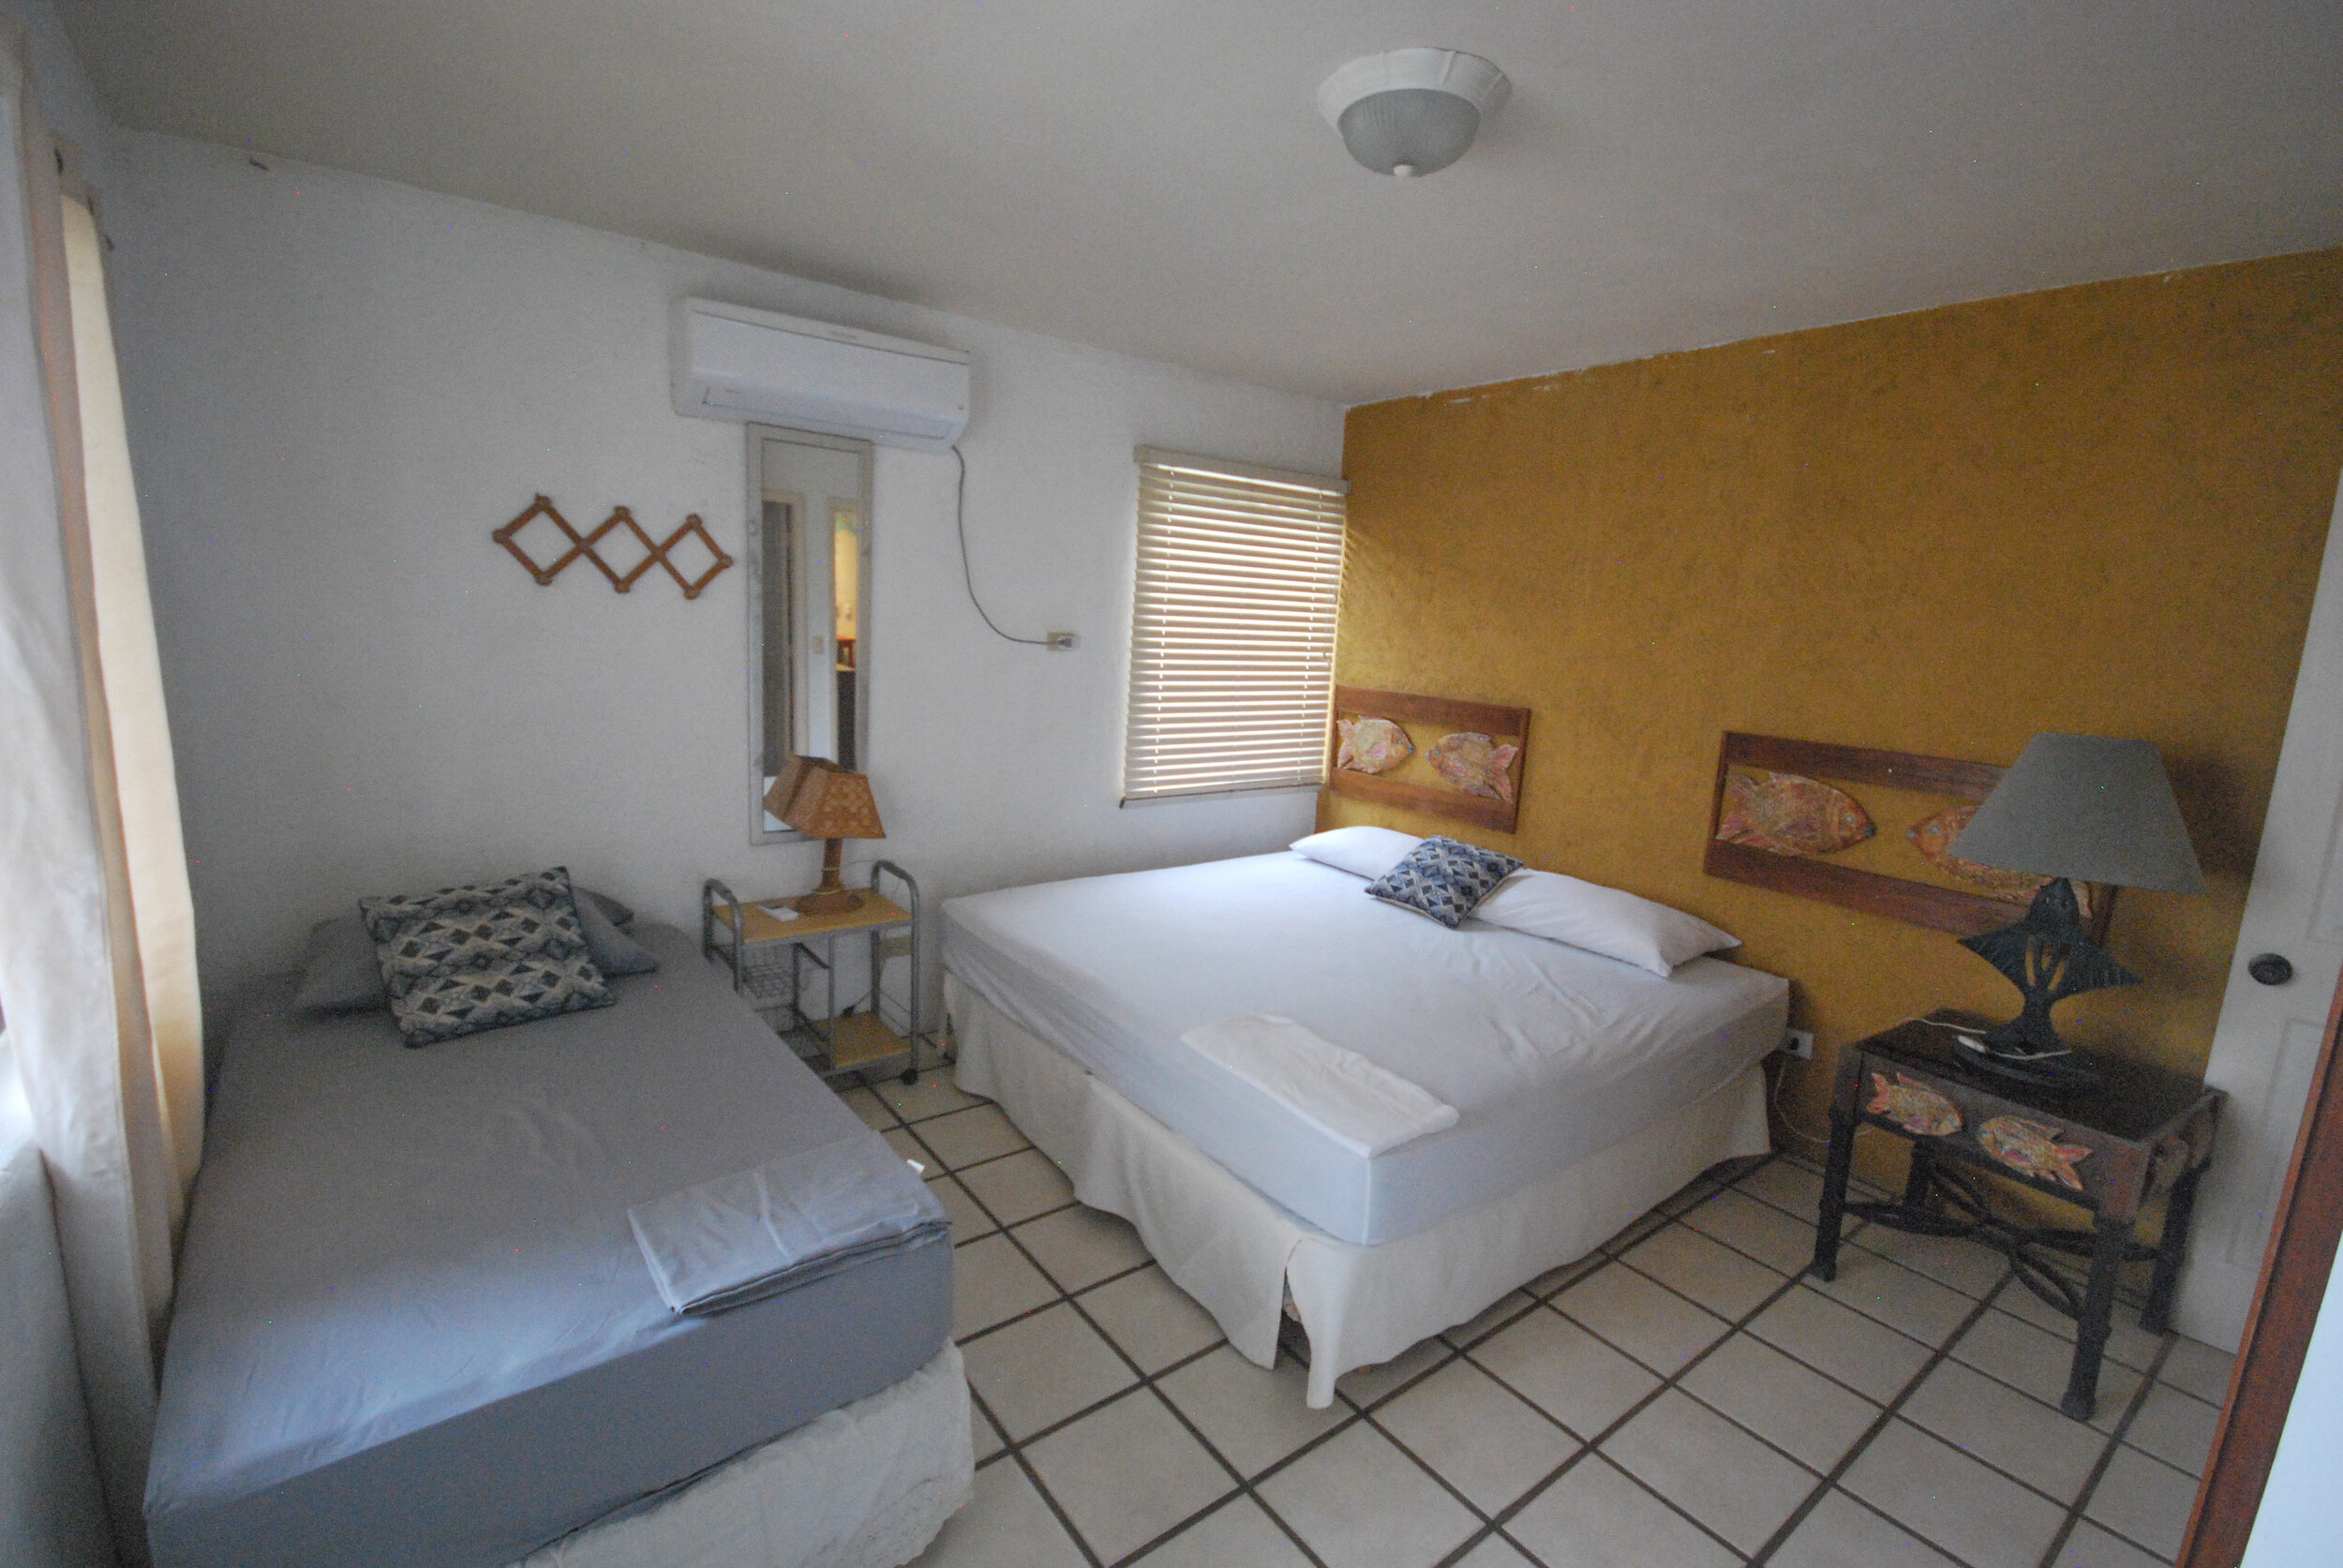 Hotel Resort For Sale San Juan Del Sur Nicaragua 22.JPEG